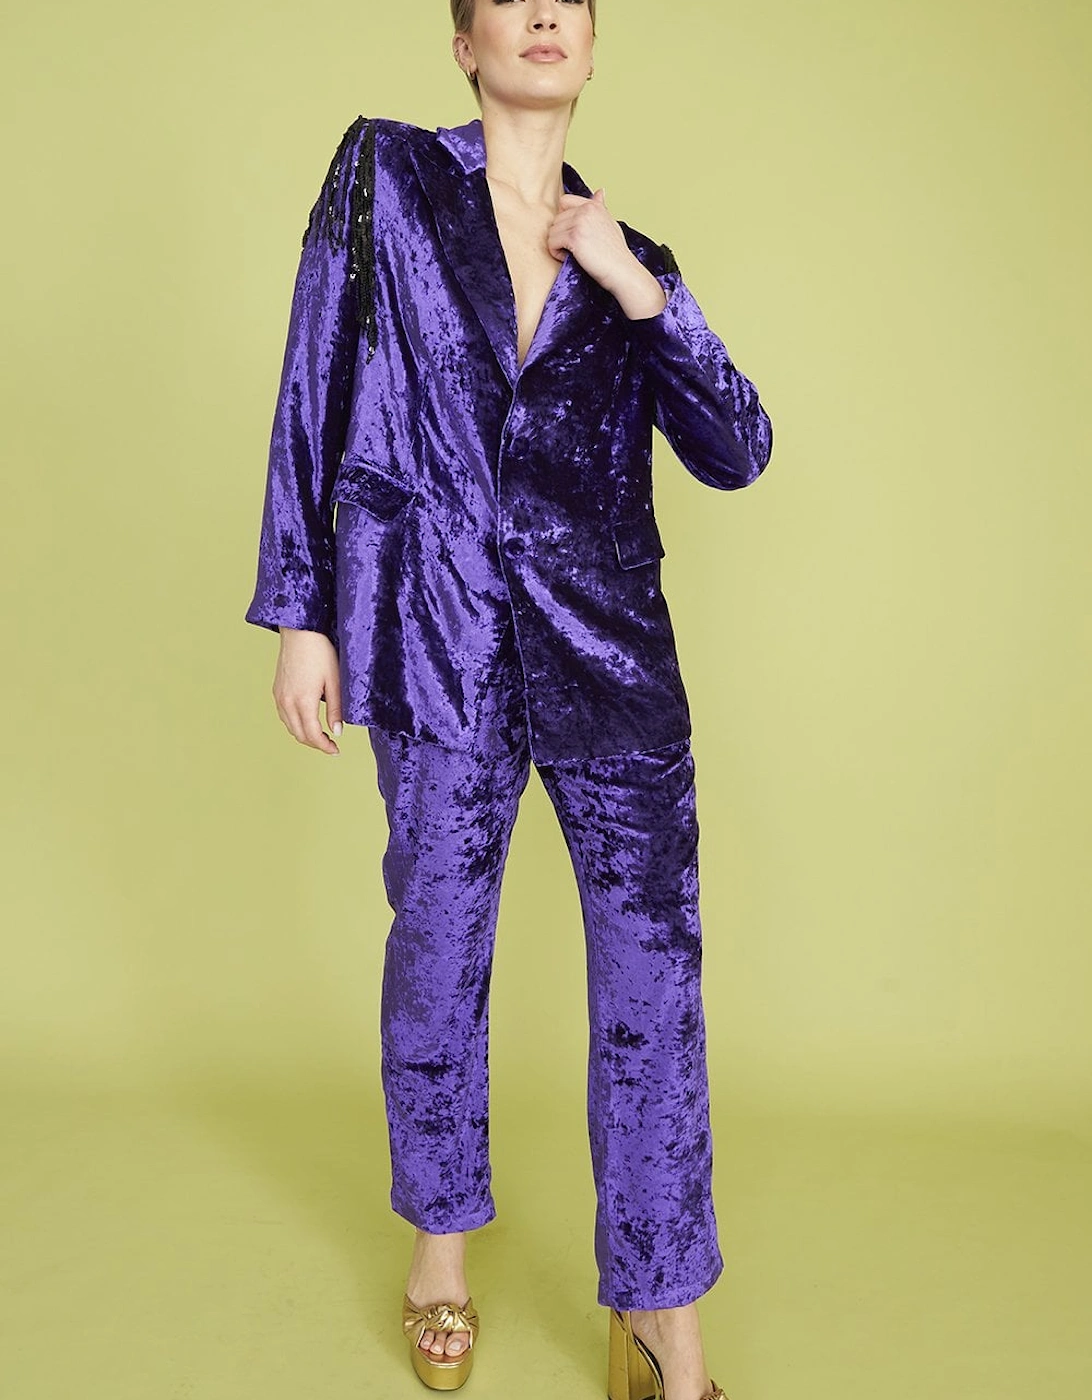 Purple Crushed Velvet Blazer Jacket